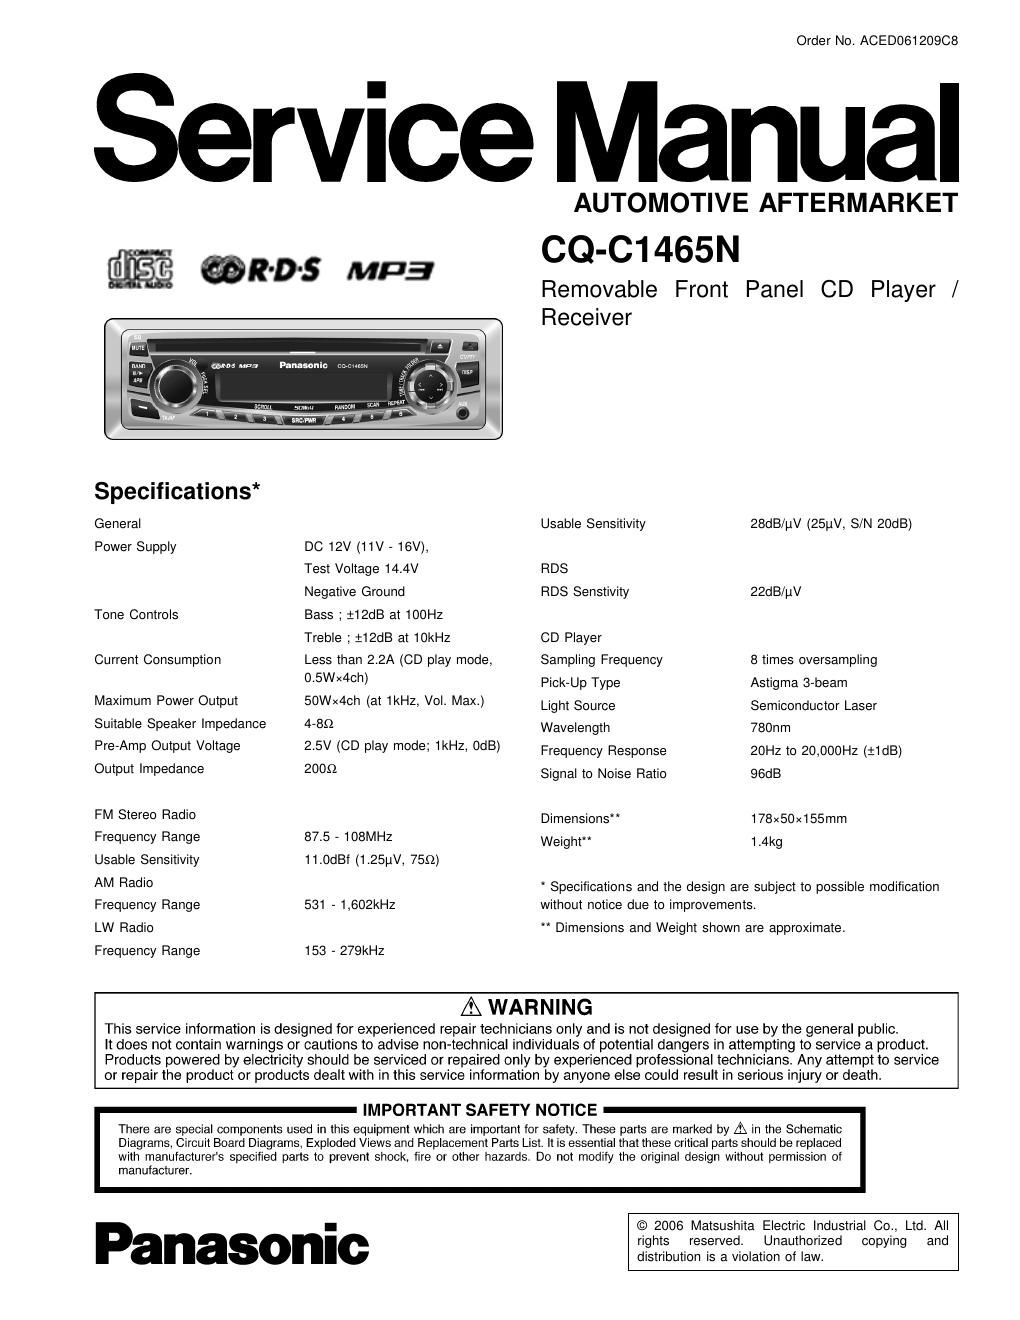 panasonic cq c 1465 n service manual